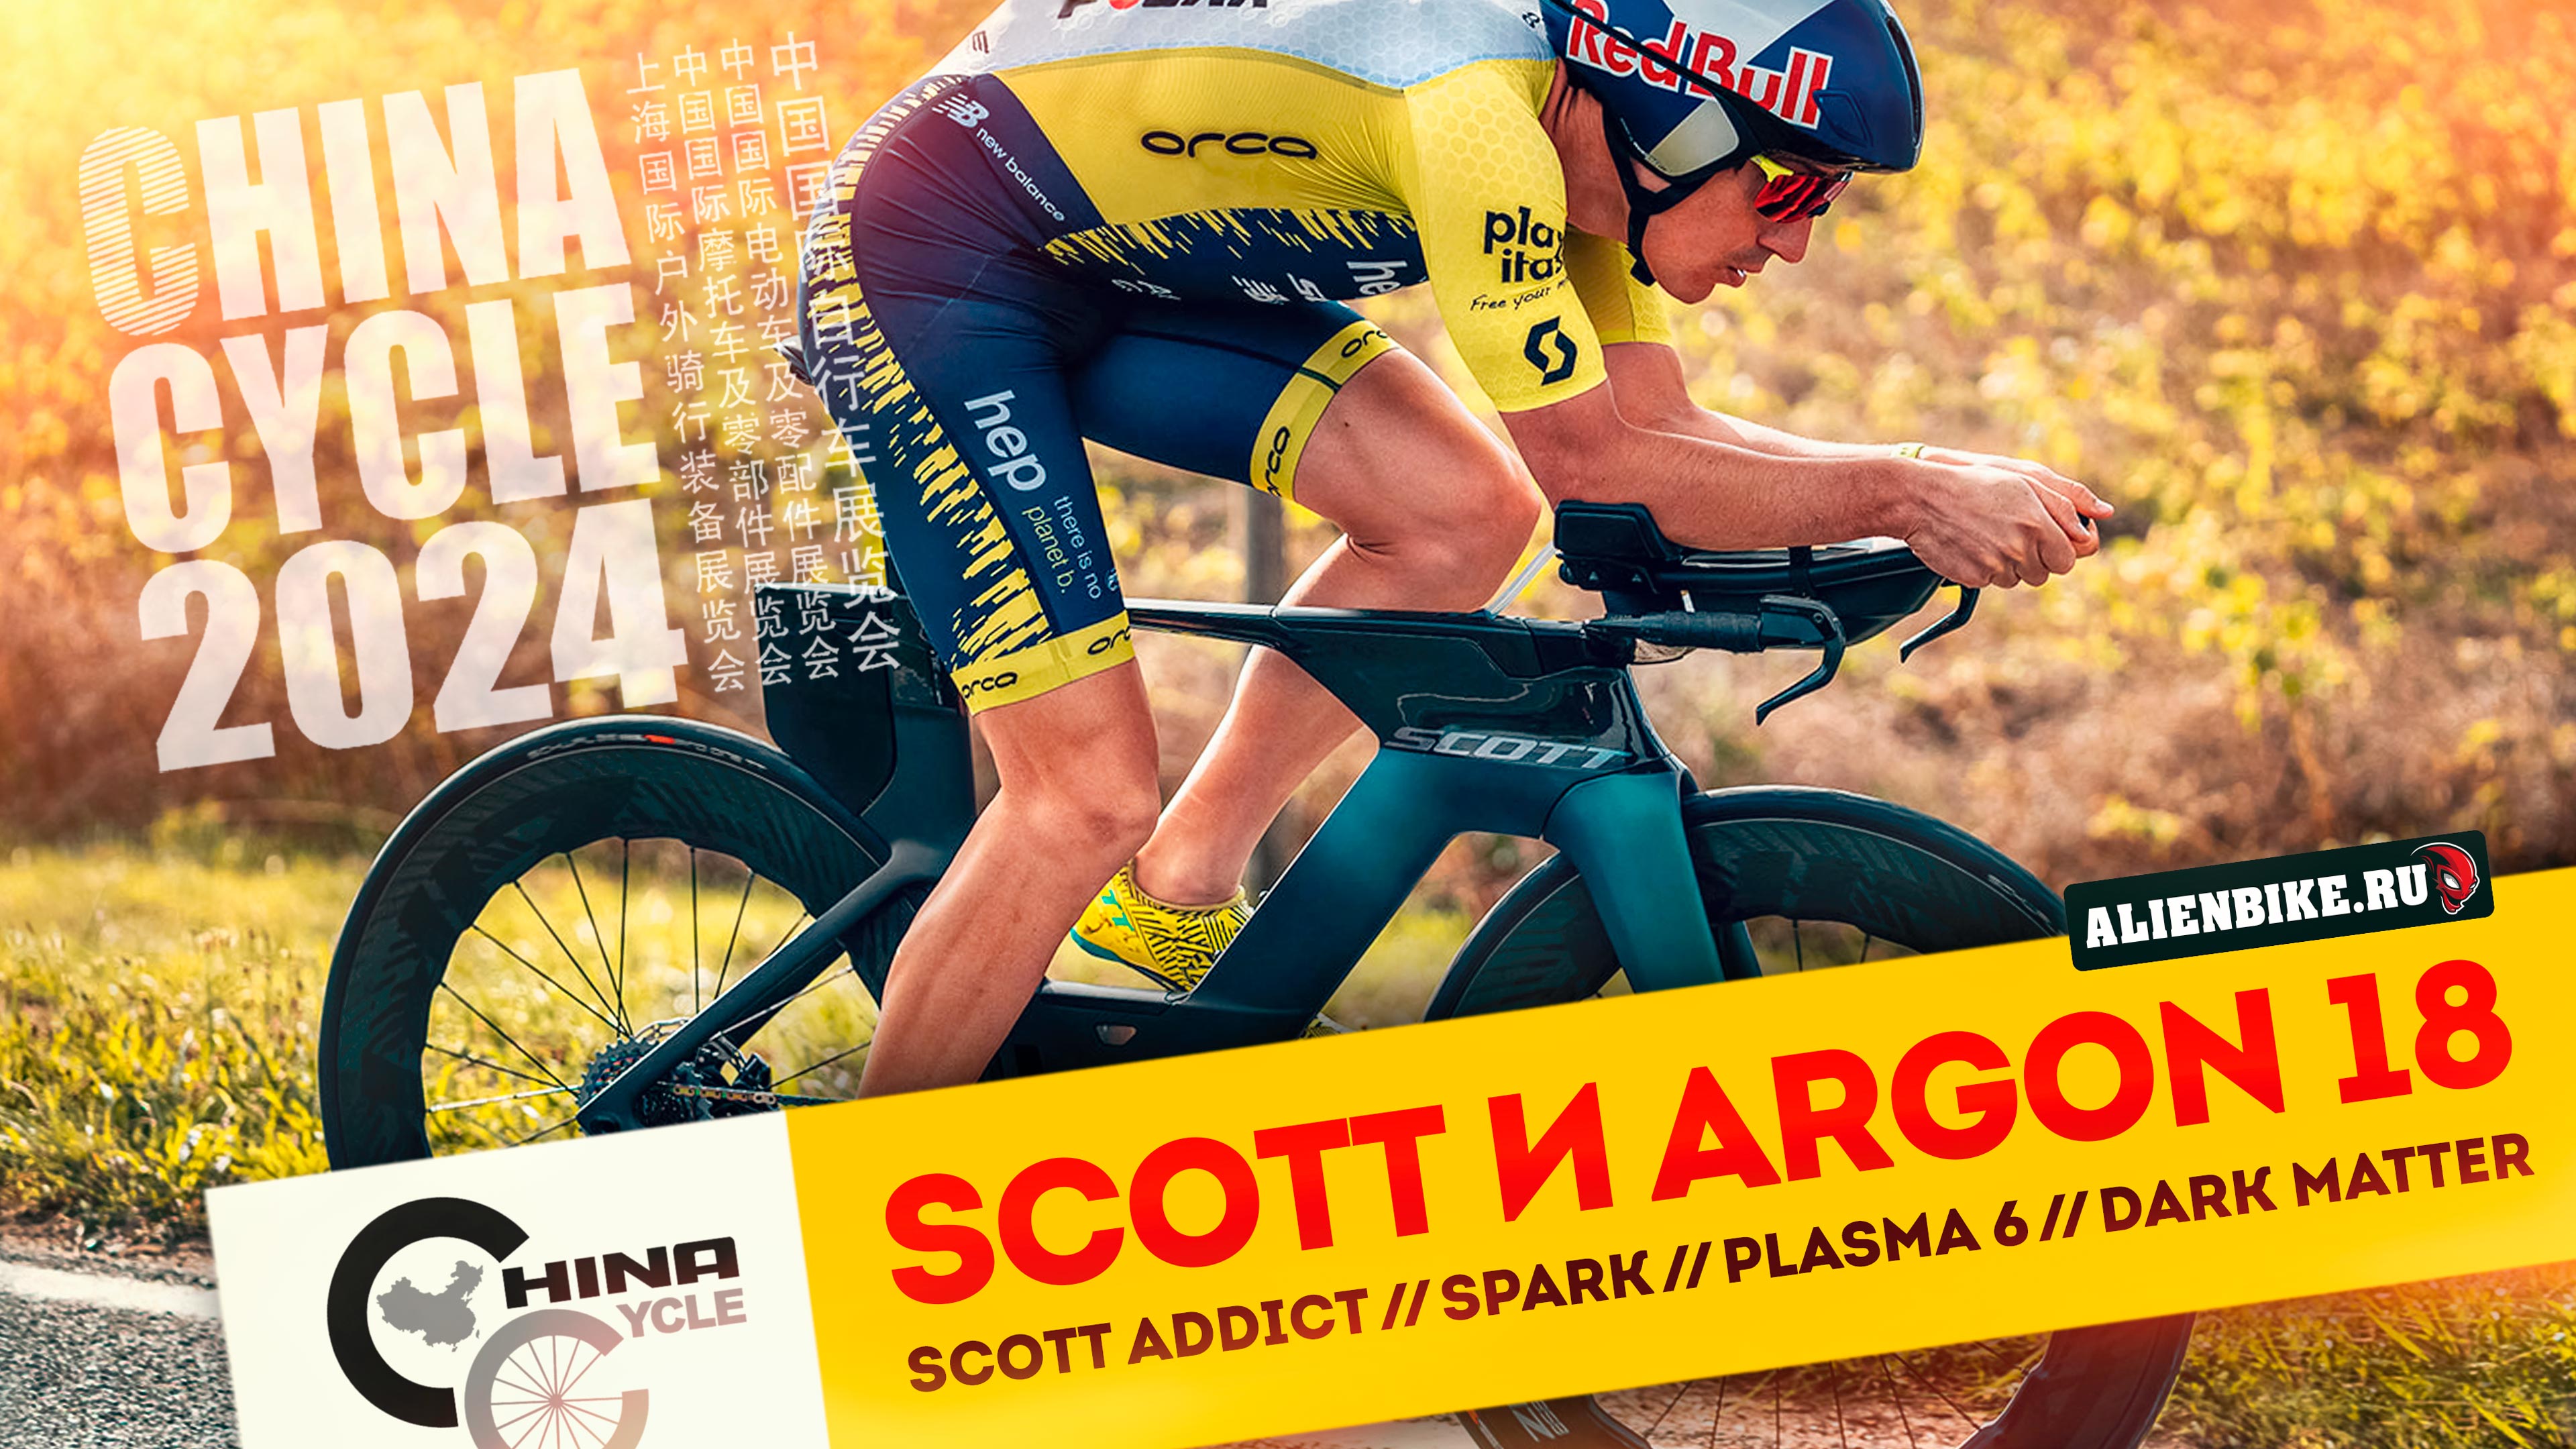 Велосипеды Scott и Argon 18 | Scott Addict // Spark // Plasma 6 // Dark Matter | China Cycle 2024